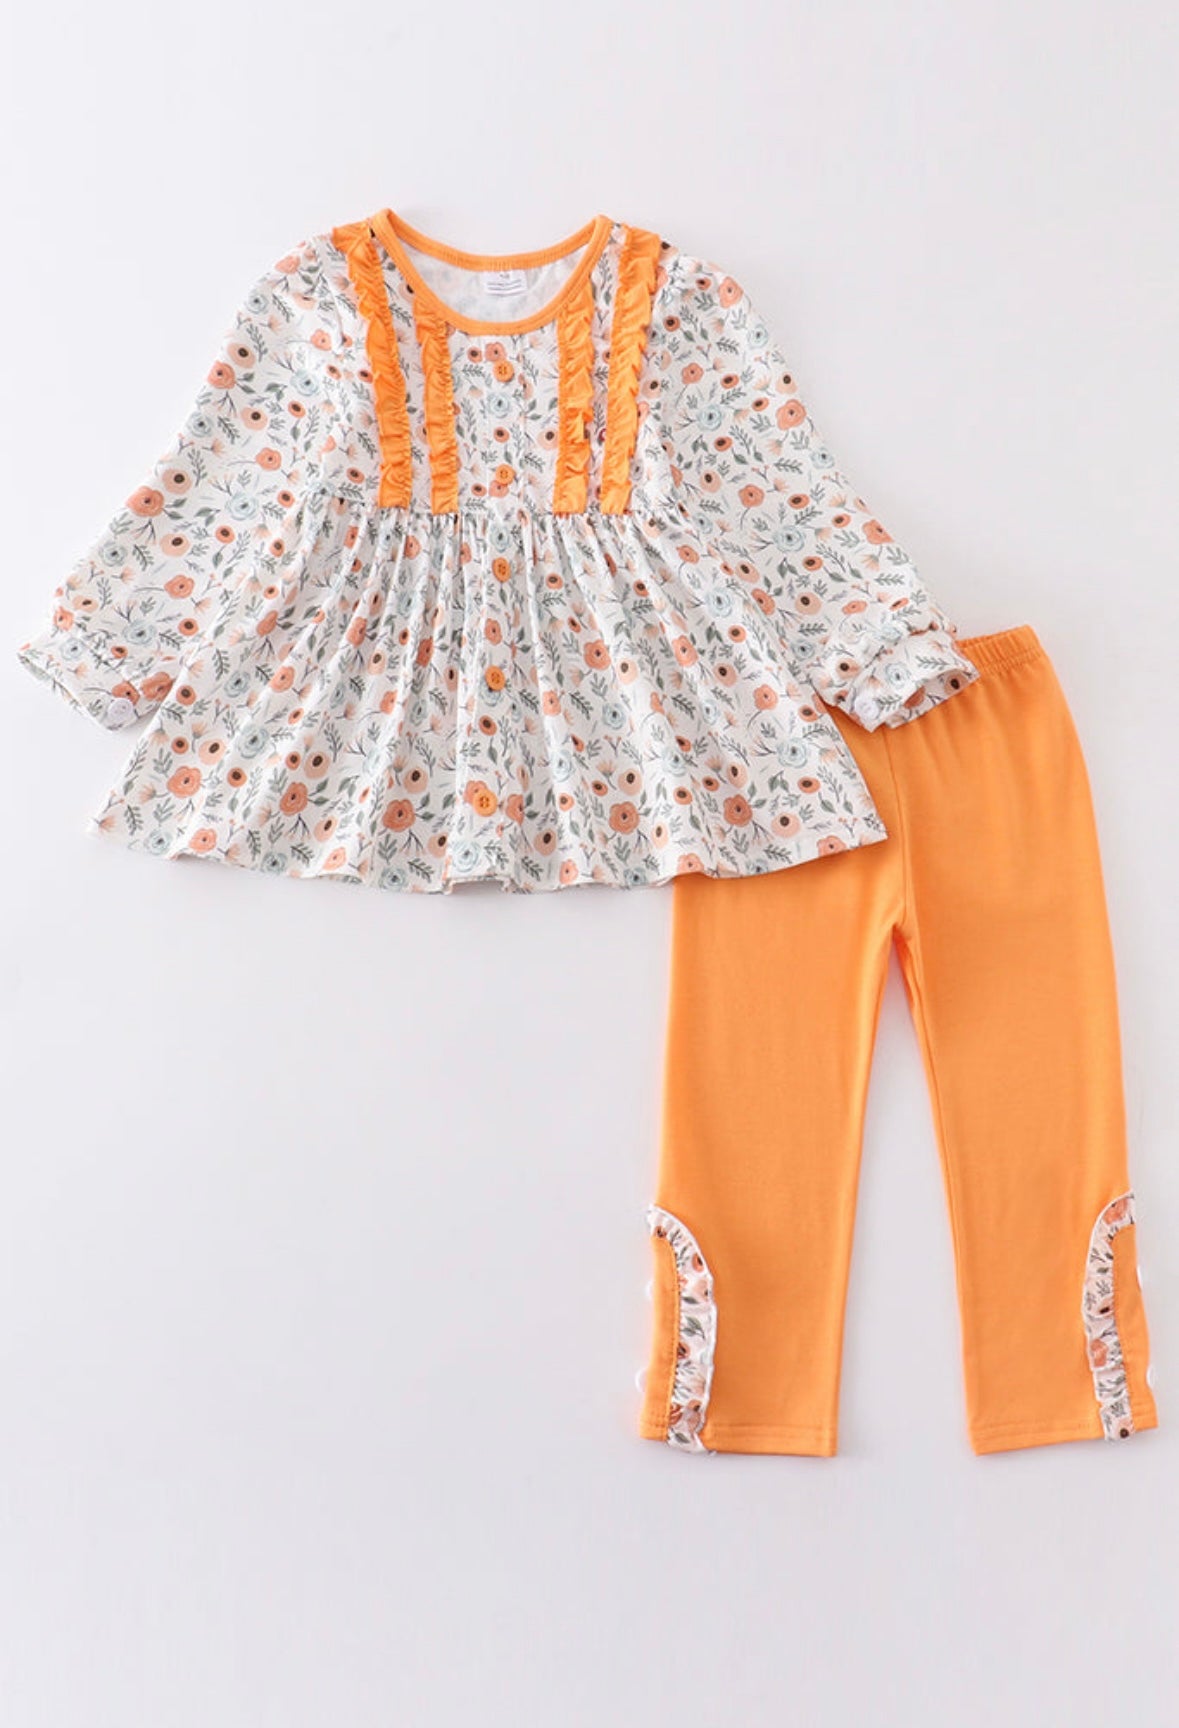 Apricot Foe Button Floral Outfit